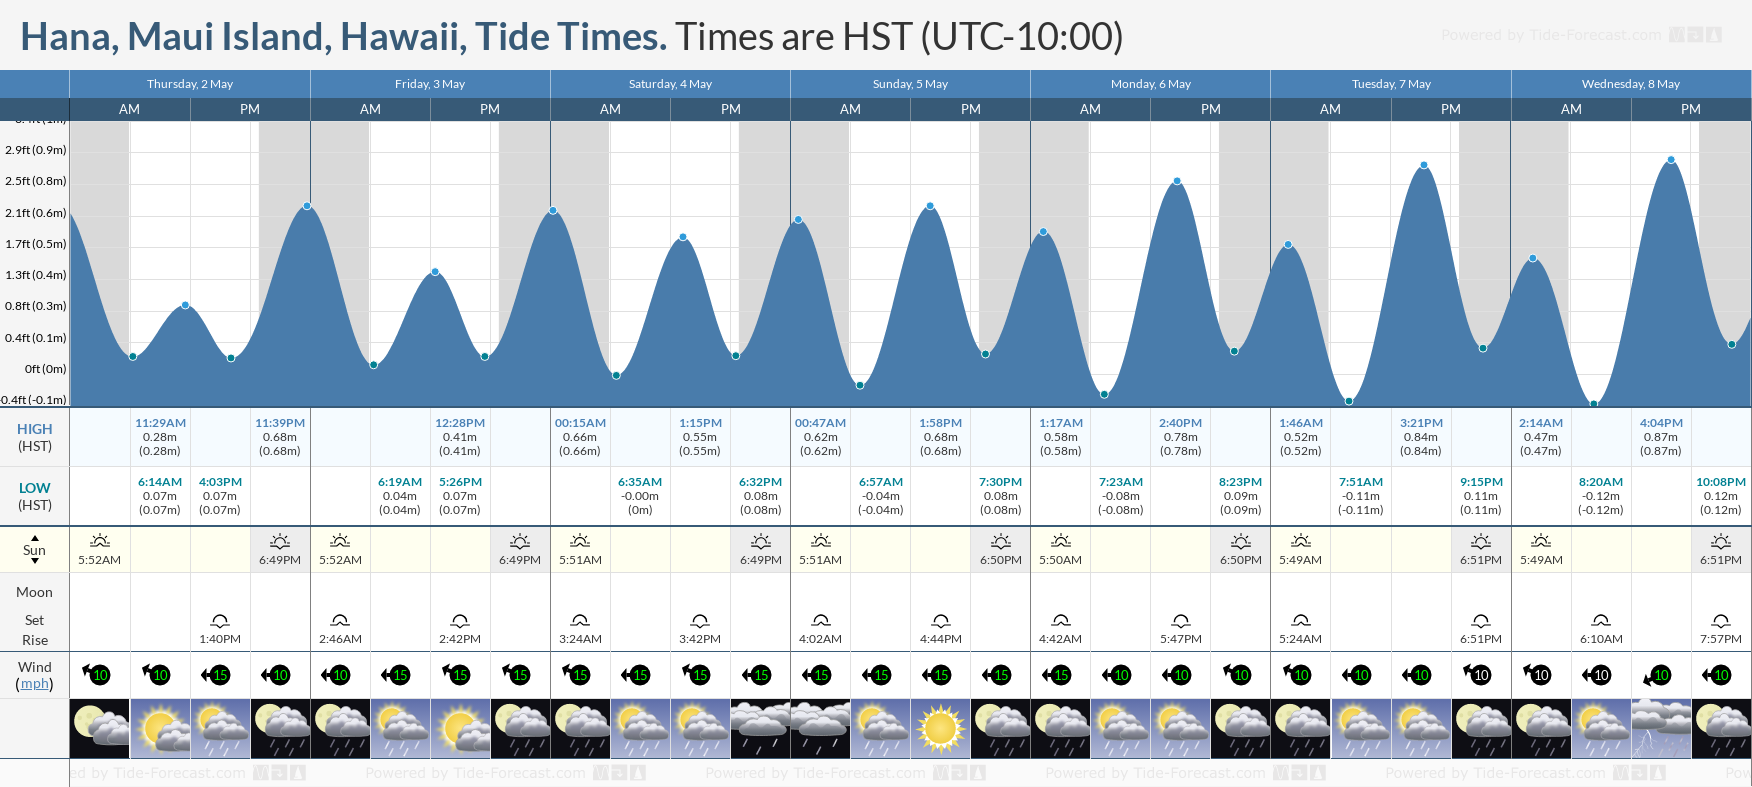 Hana, Maui Island, Hawaii Tide Chart including high and low tide tide times for the next 7 days